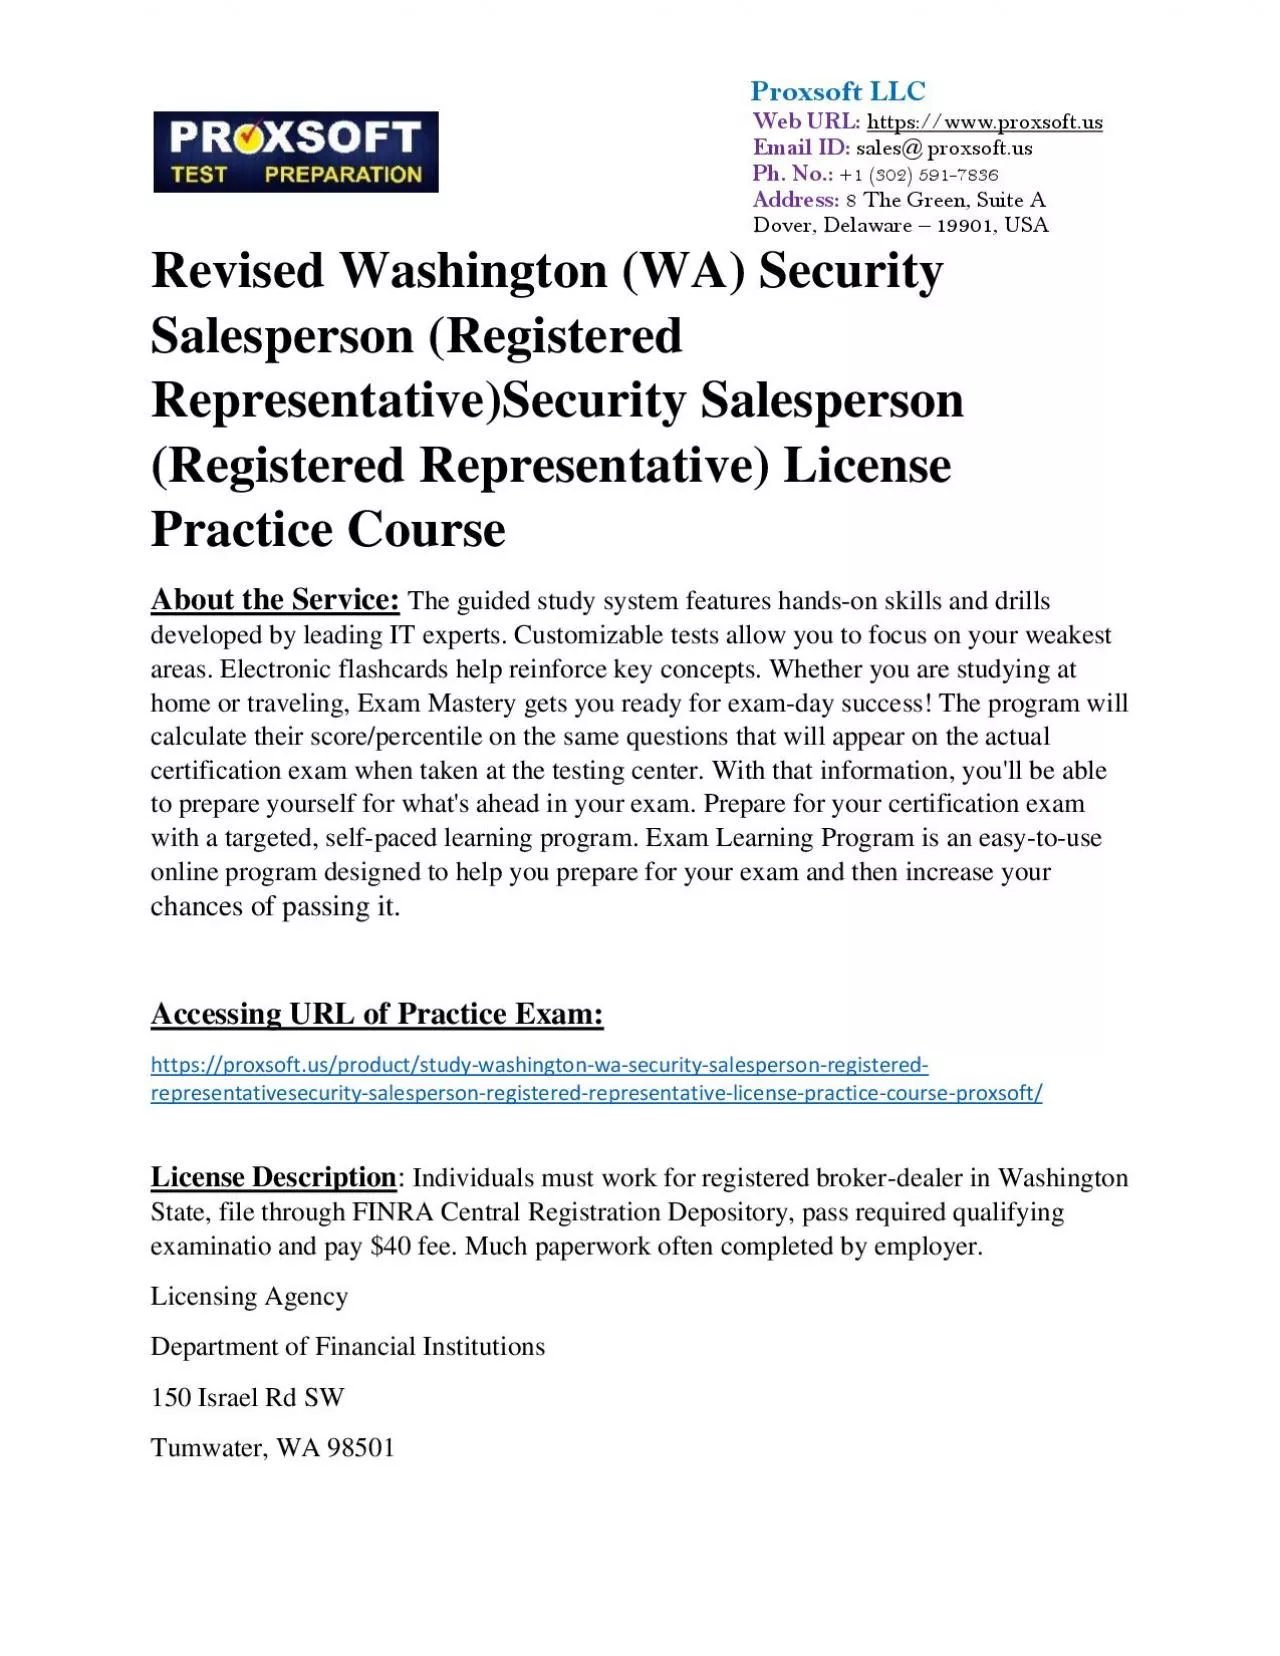 Revised Washington (WA) Security Salesperson (Registered Representative)Security Salesperson